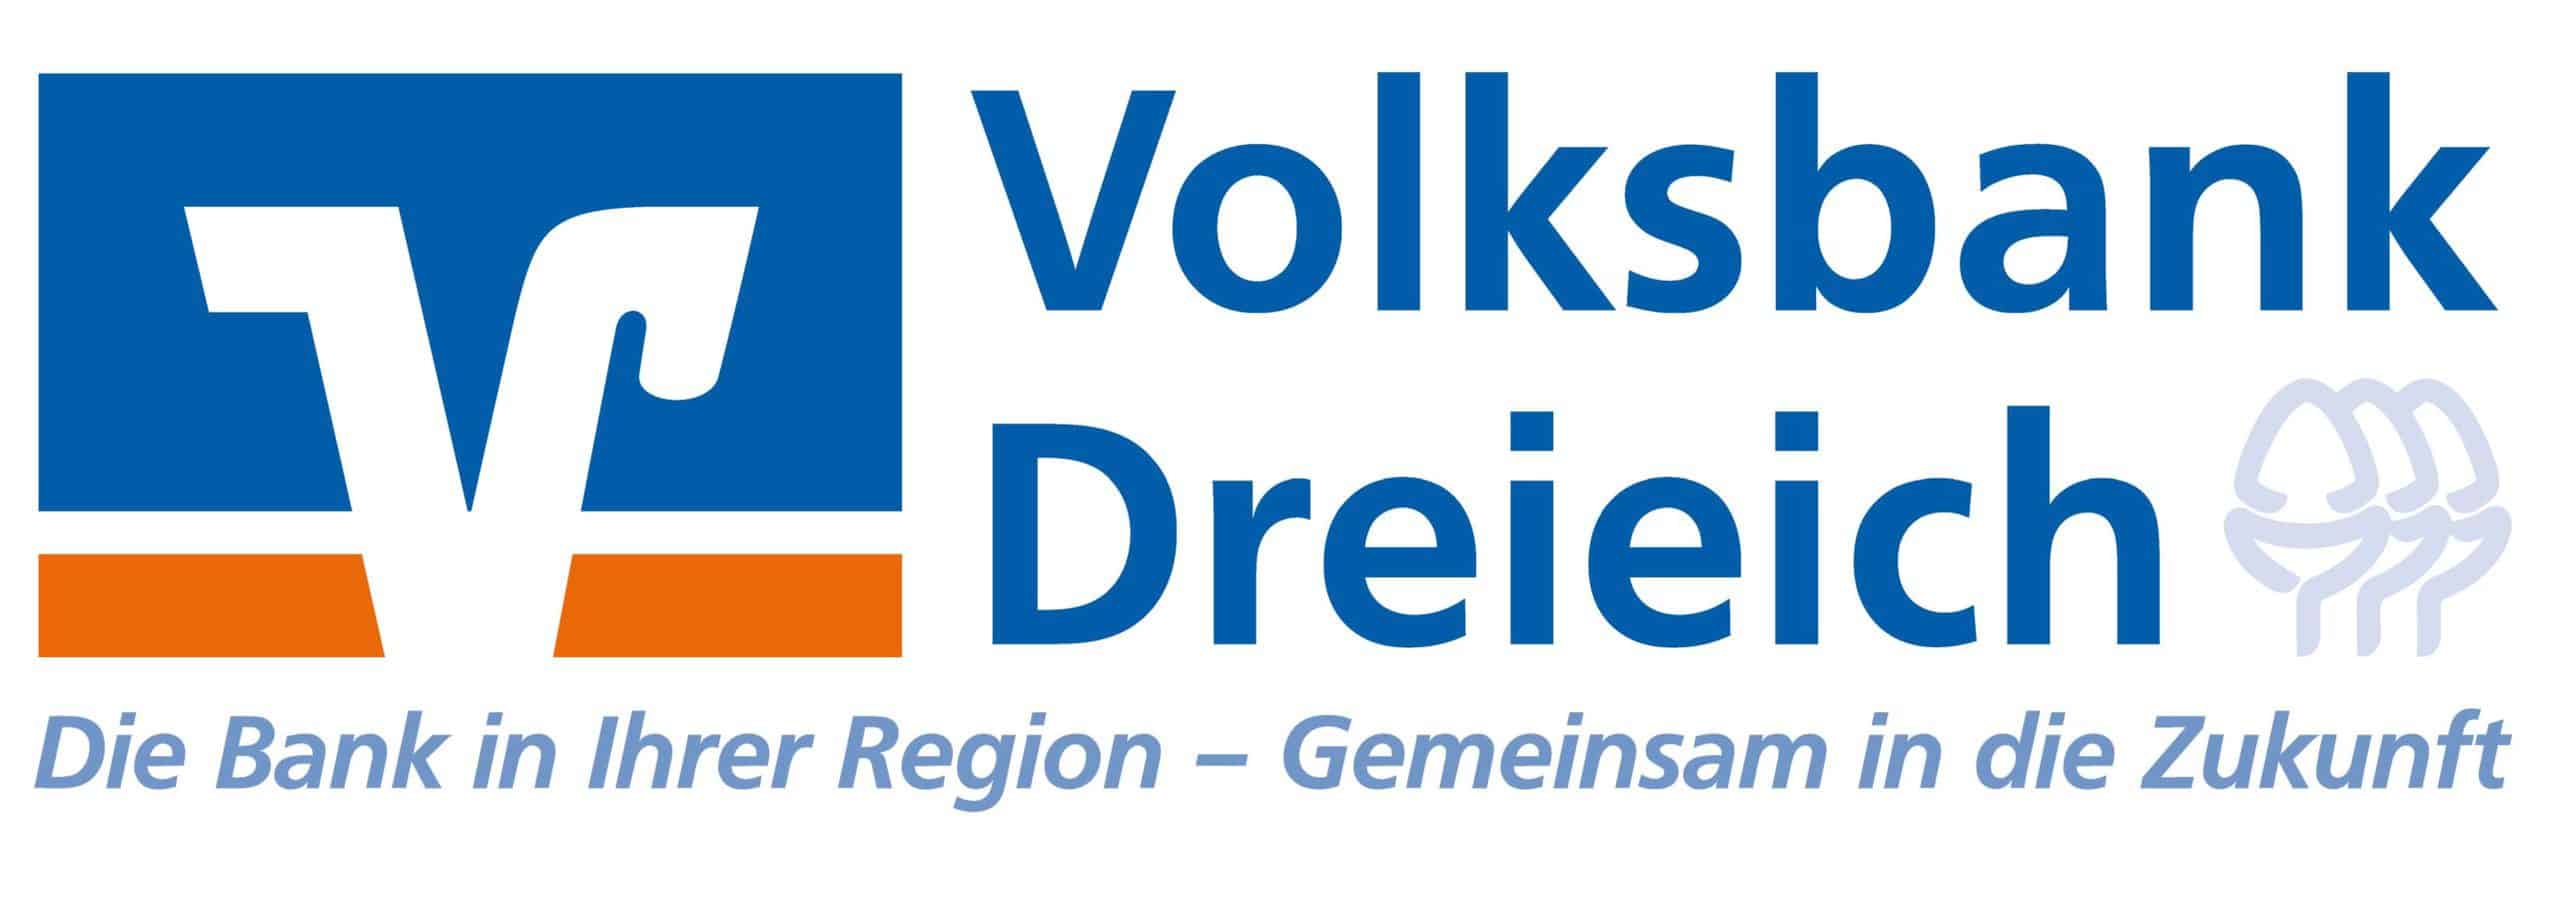 Volksbank Dreieich Logo Premiumsponsor Lions Club Neu-Isenburg